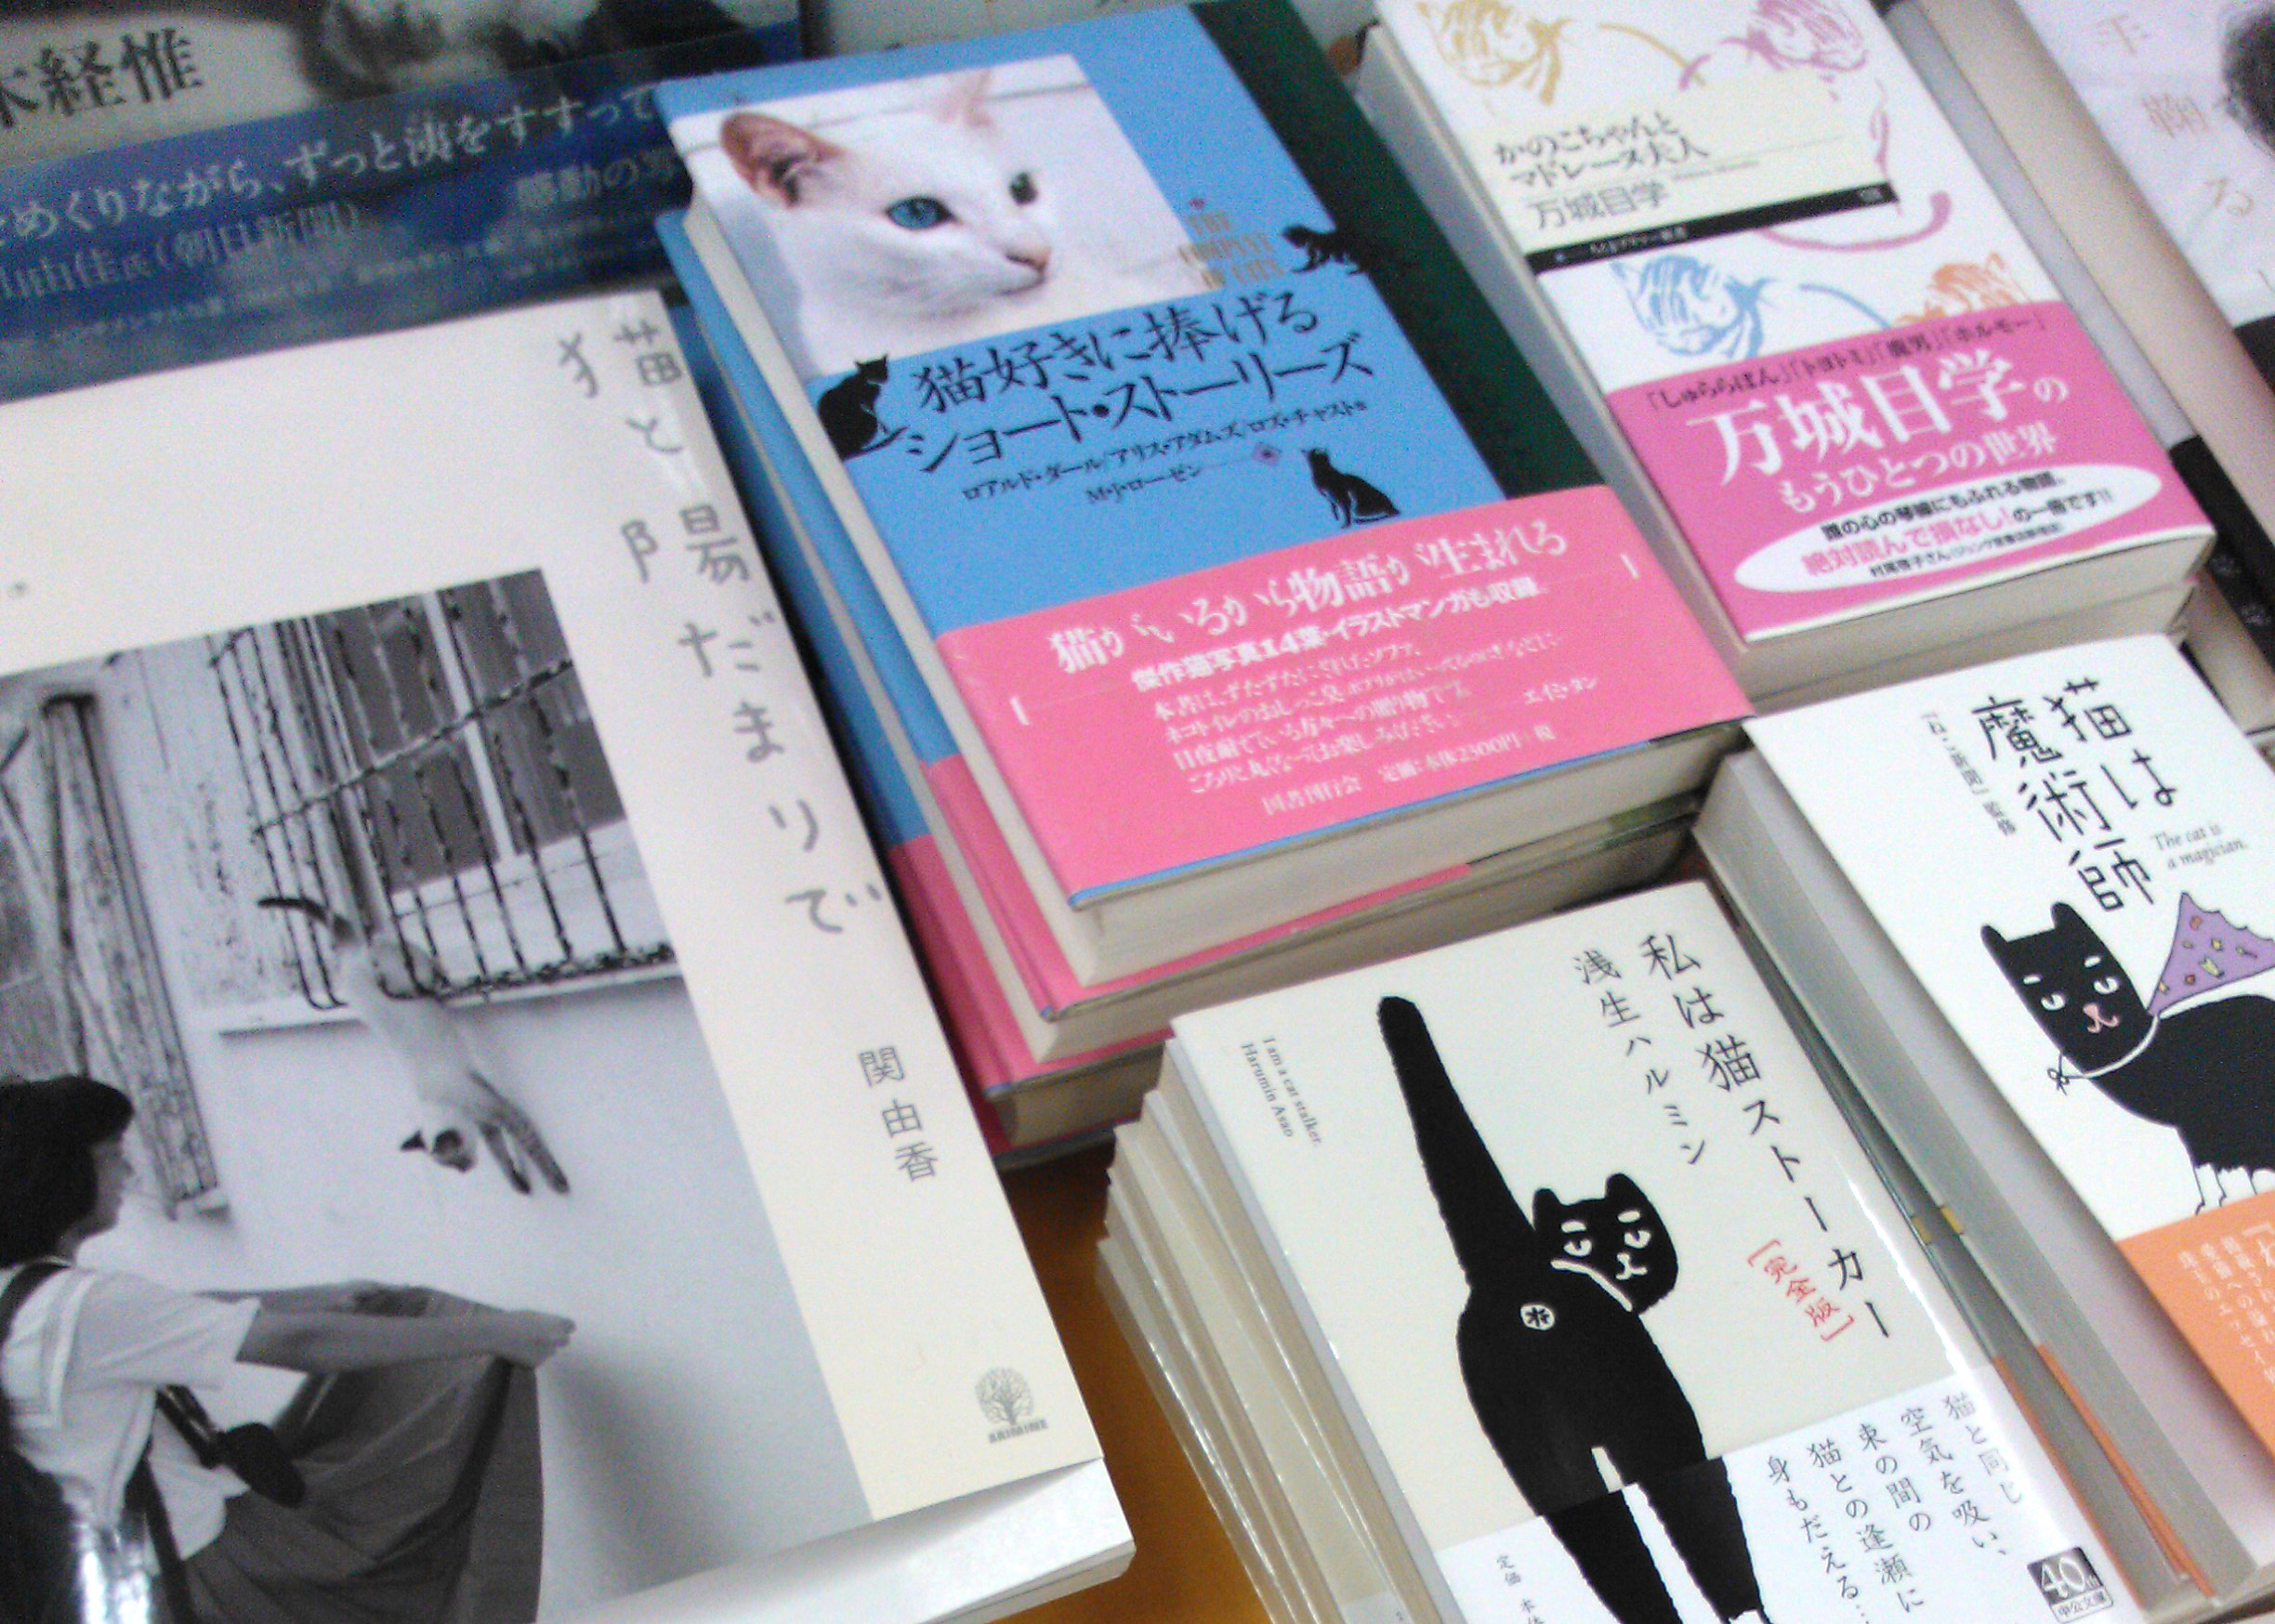 Tokyo bookstores